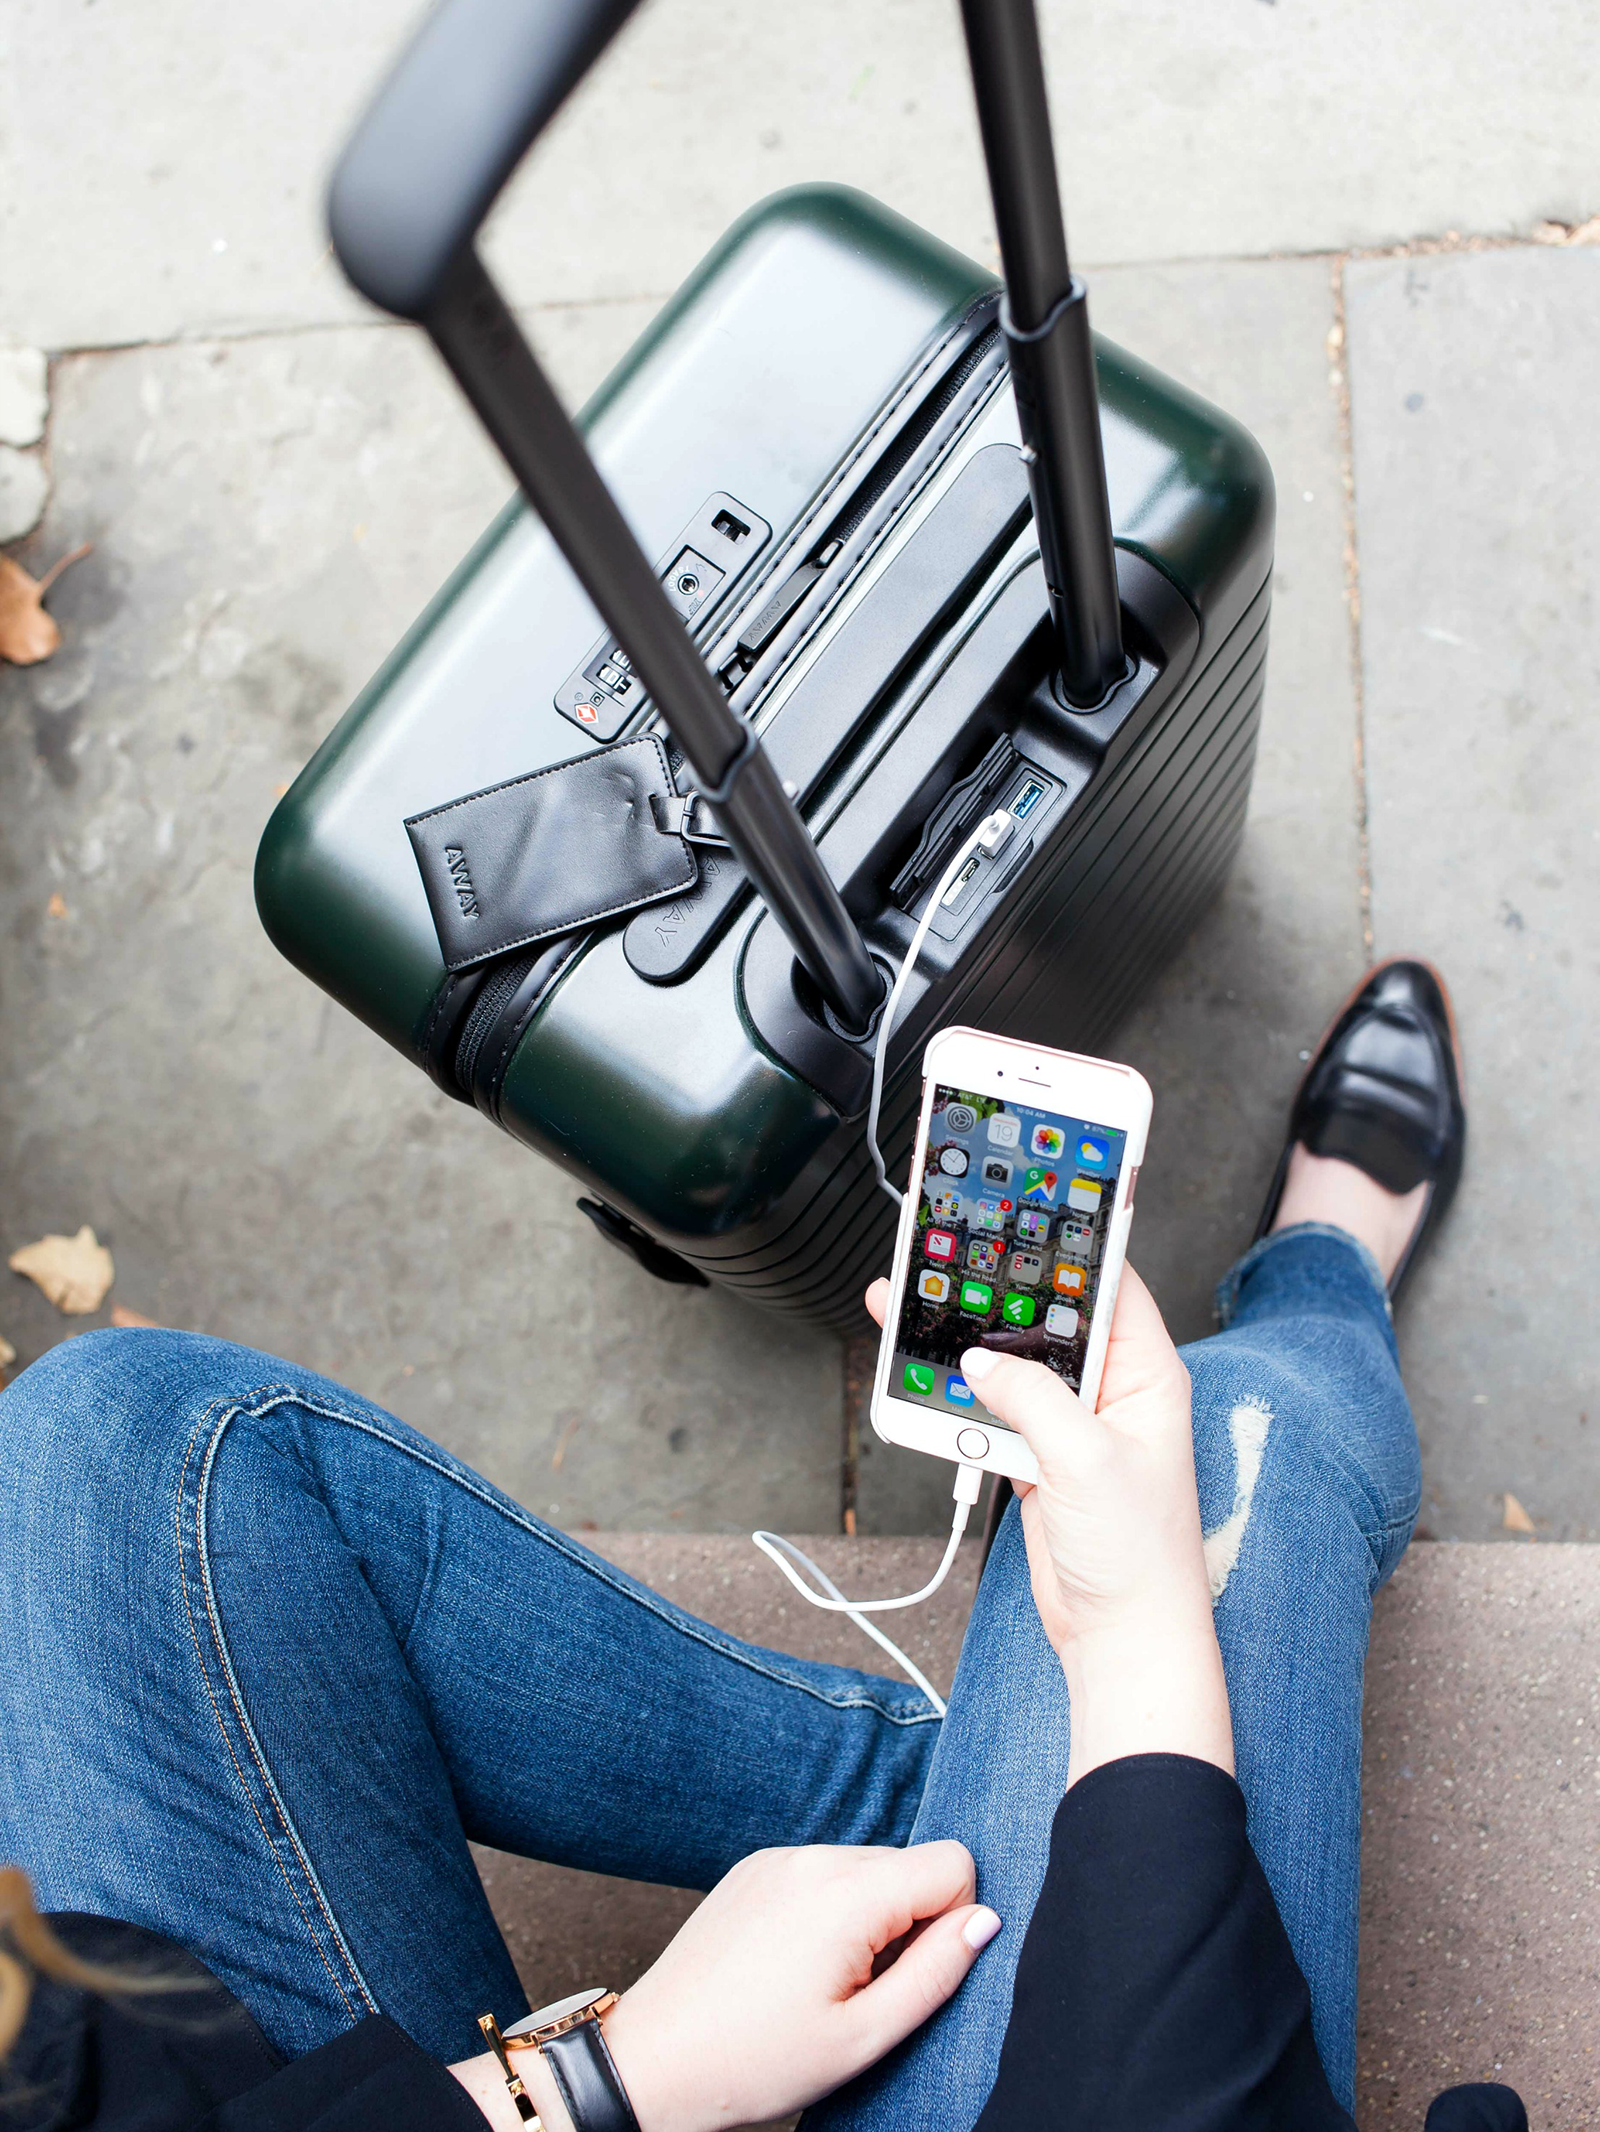 Away luggage charging phone